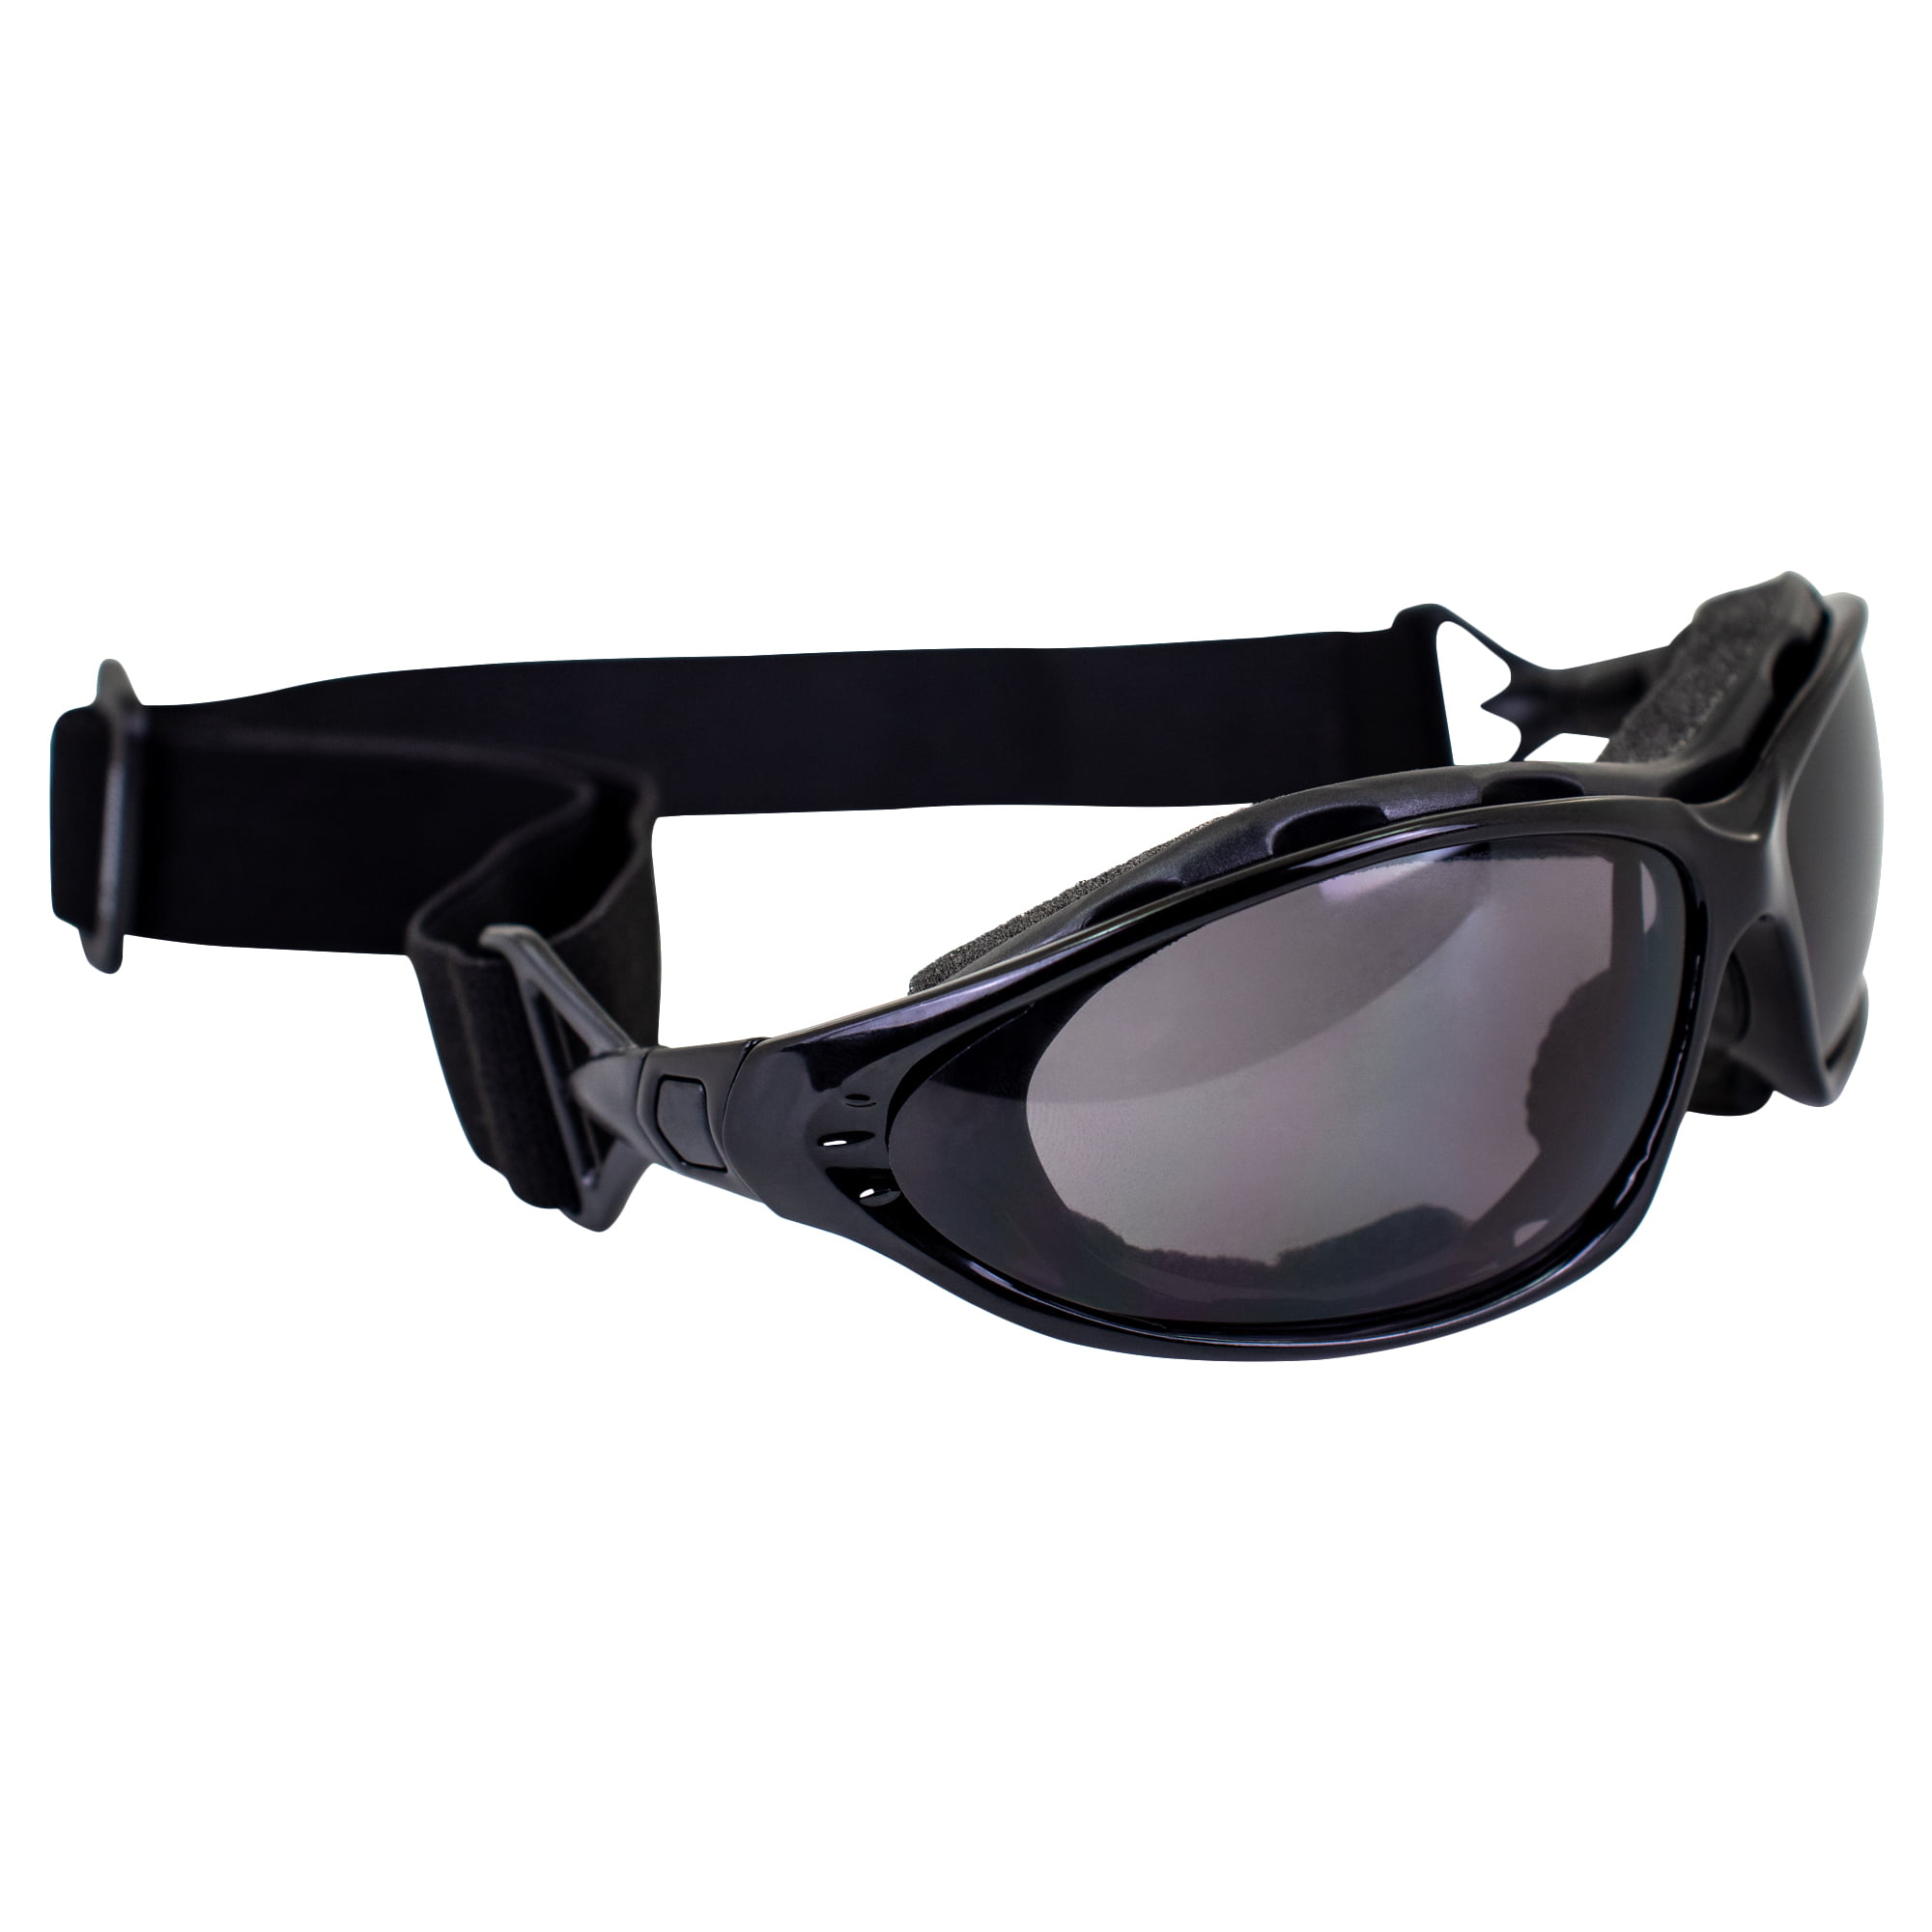 Birdz Eyewear Thrasher Padded Motorcycle Sunglasses For Men & Women  Convertible to Goggles Black Frame w/ Shatterproof & Anti fog Smoke Lenses  